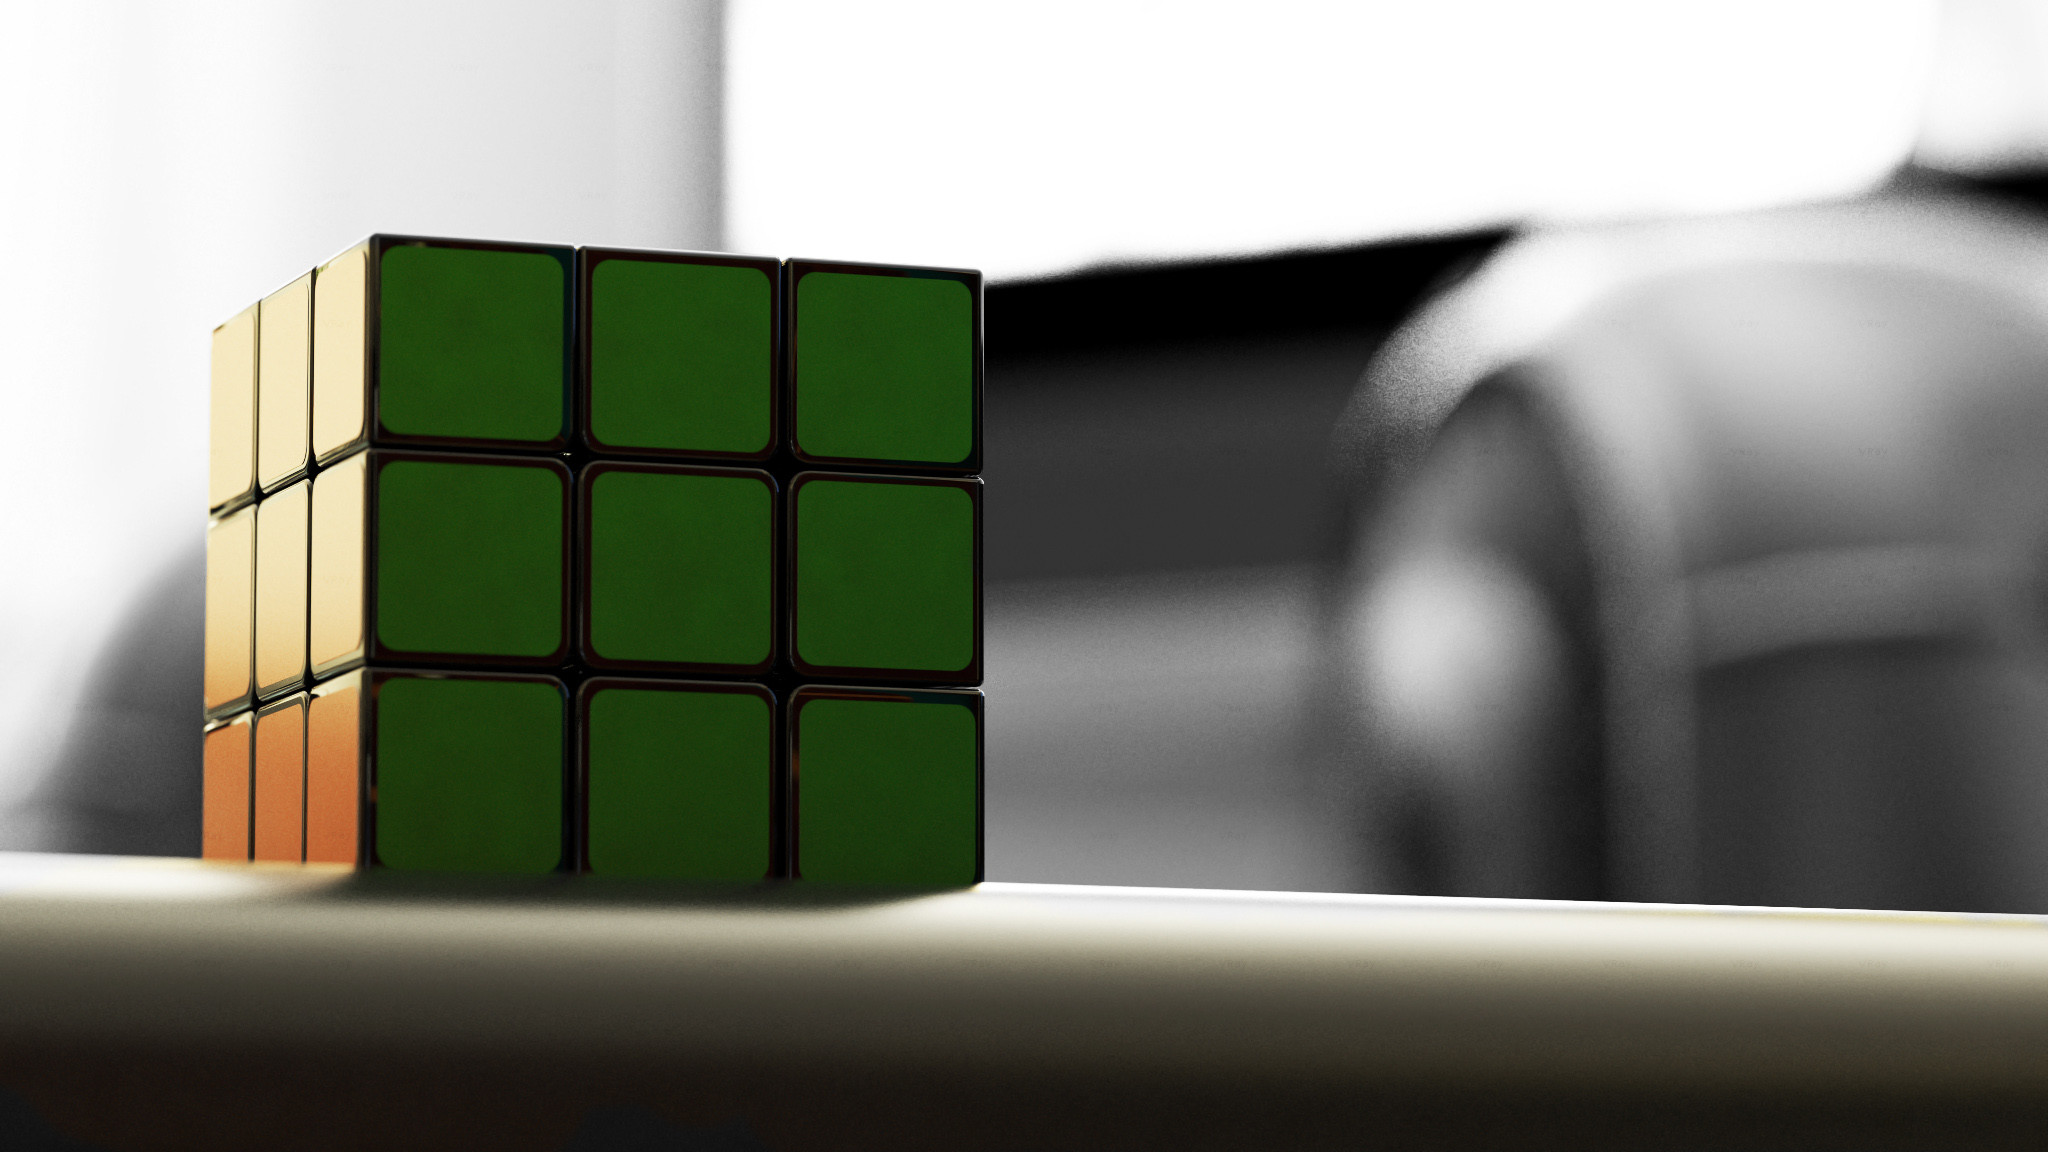 2048x1152 Rubiks cube Wallpaper by DjCanalex Rubiks cube Wallpaper by DjCanalex